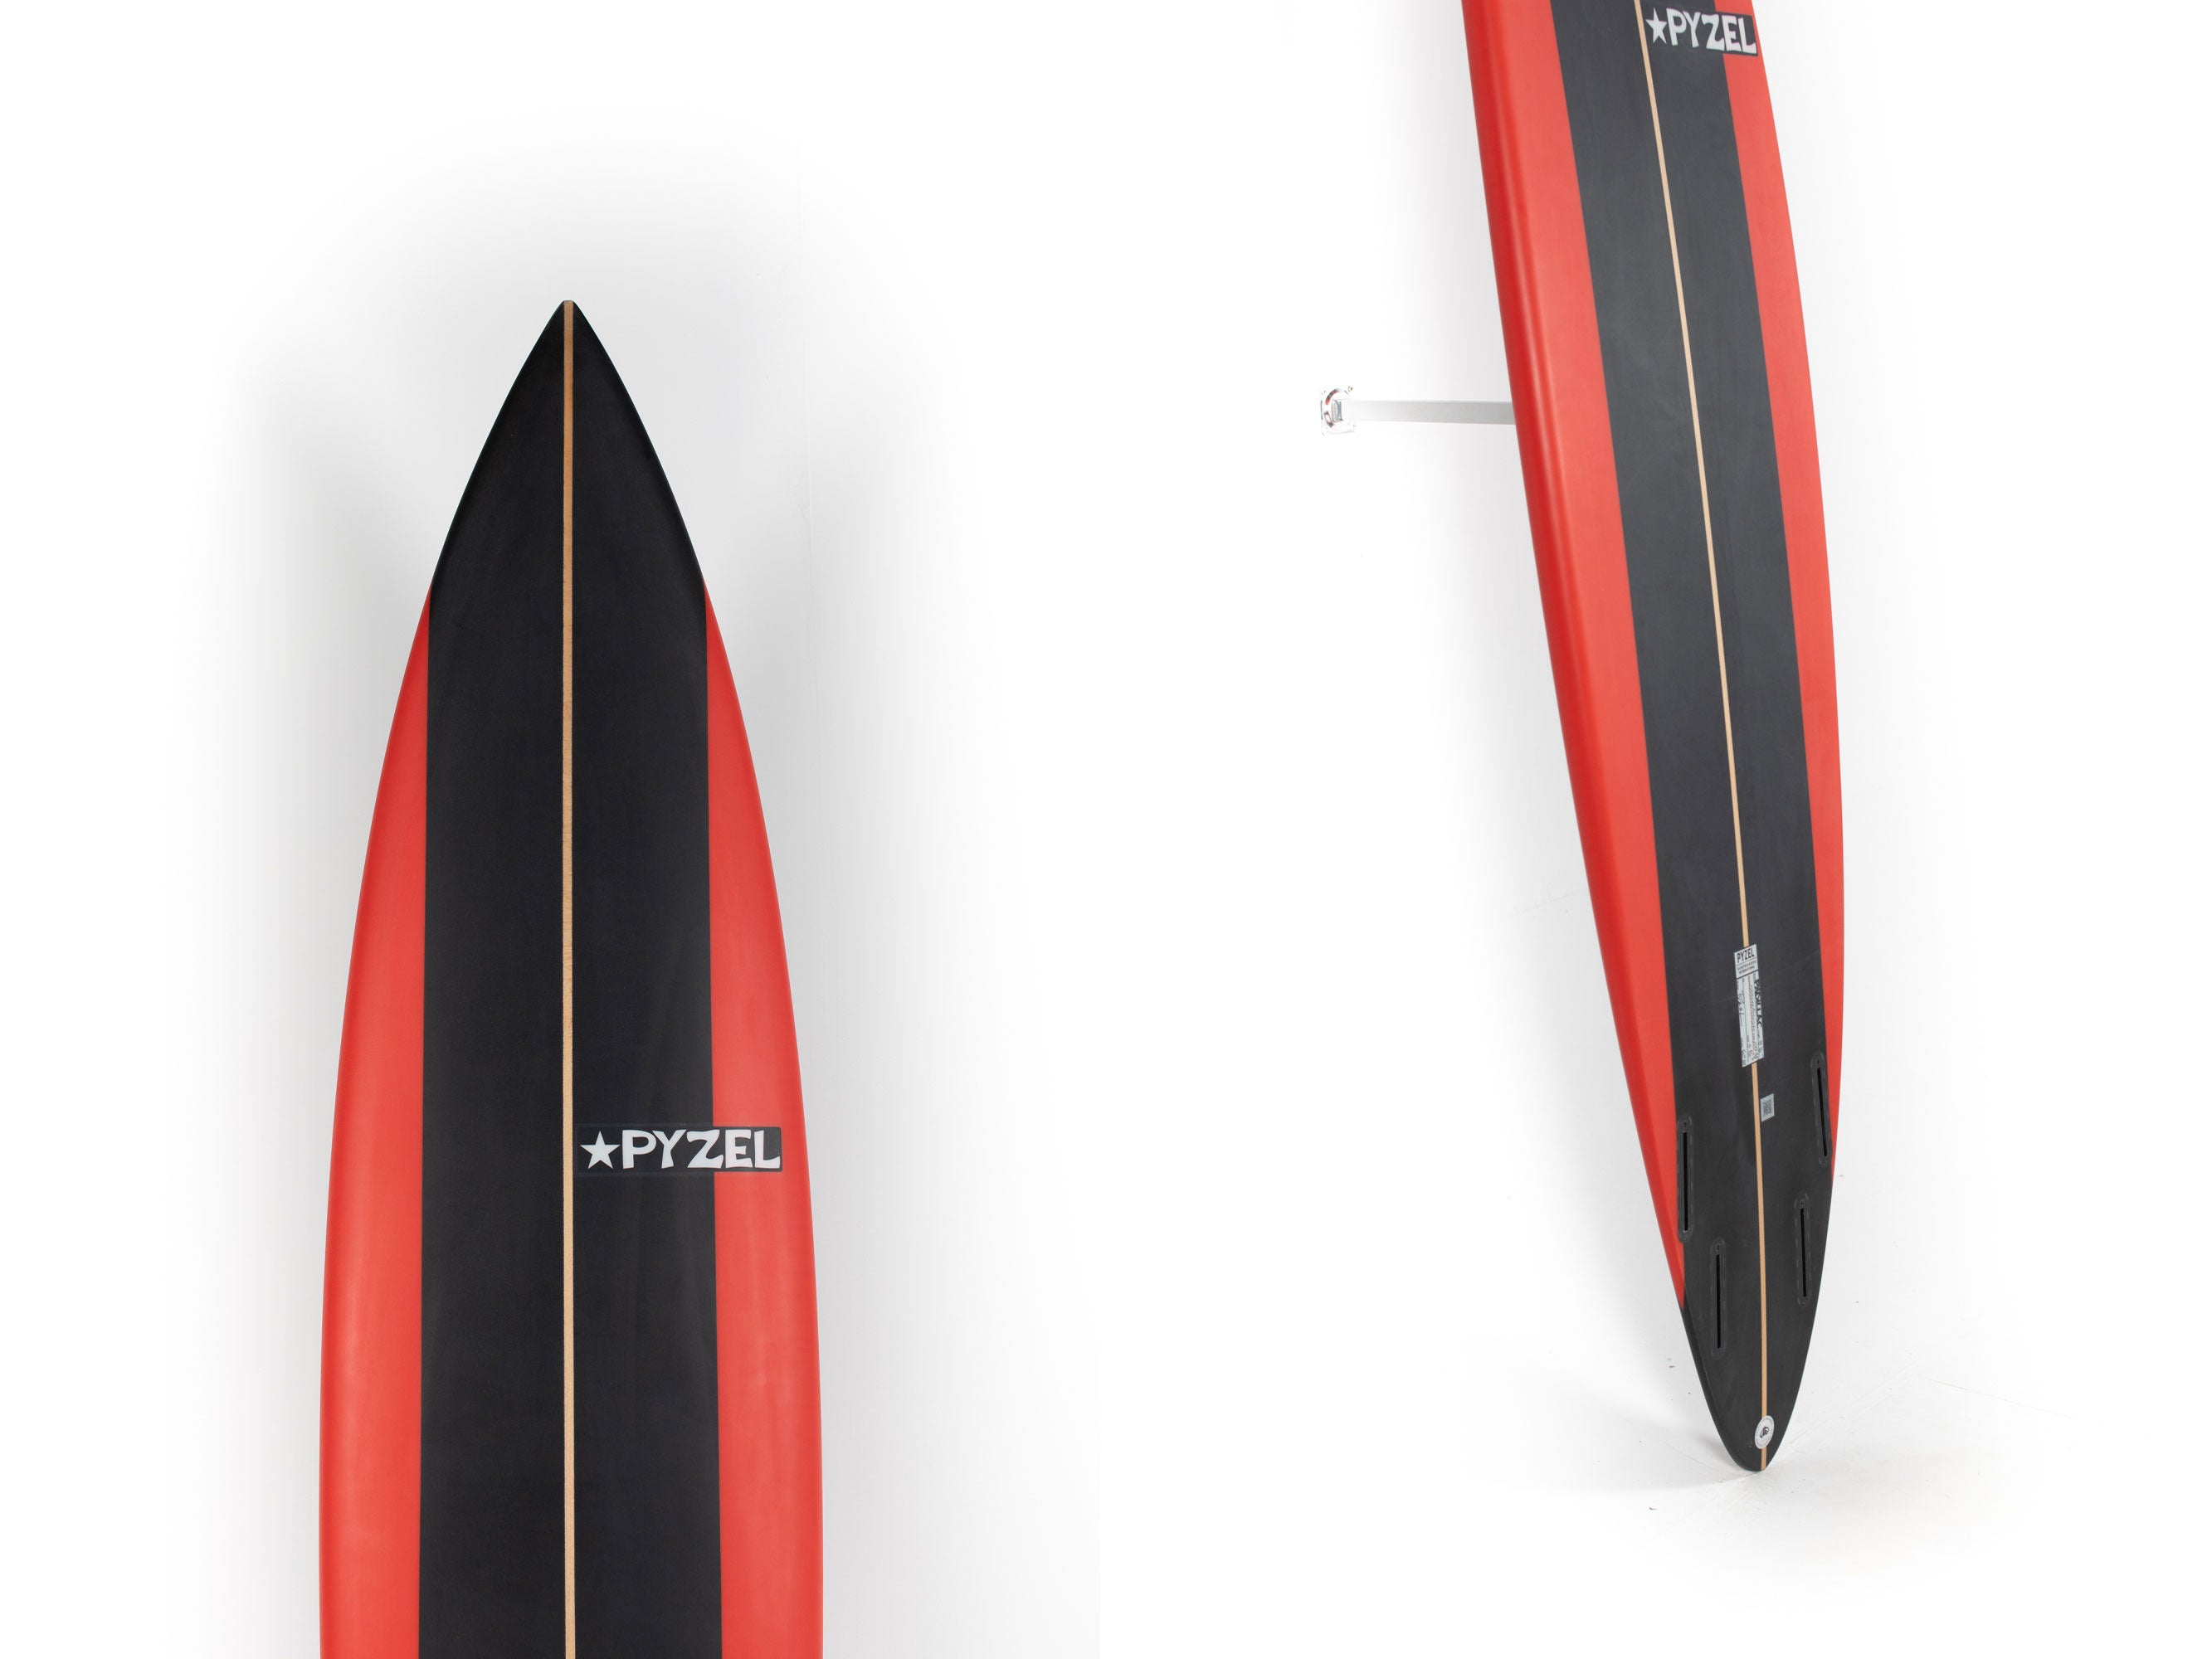 Pyzel Surfboards - PADILLAC - 8'6" x 20 3/4 x 3 1/2 - 62,8L - Ref: 555315